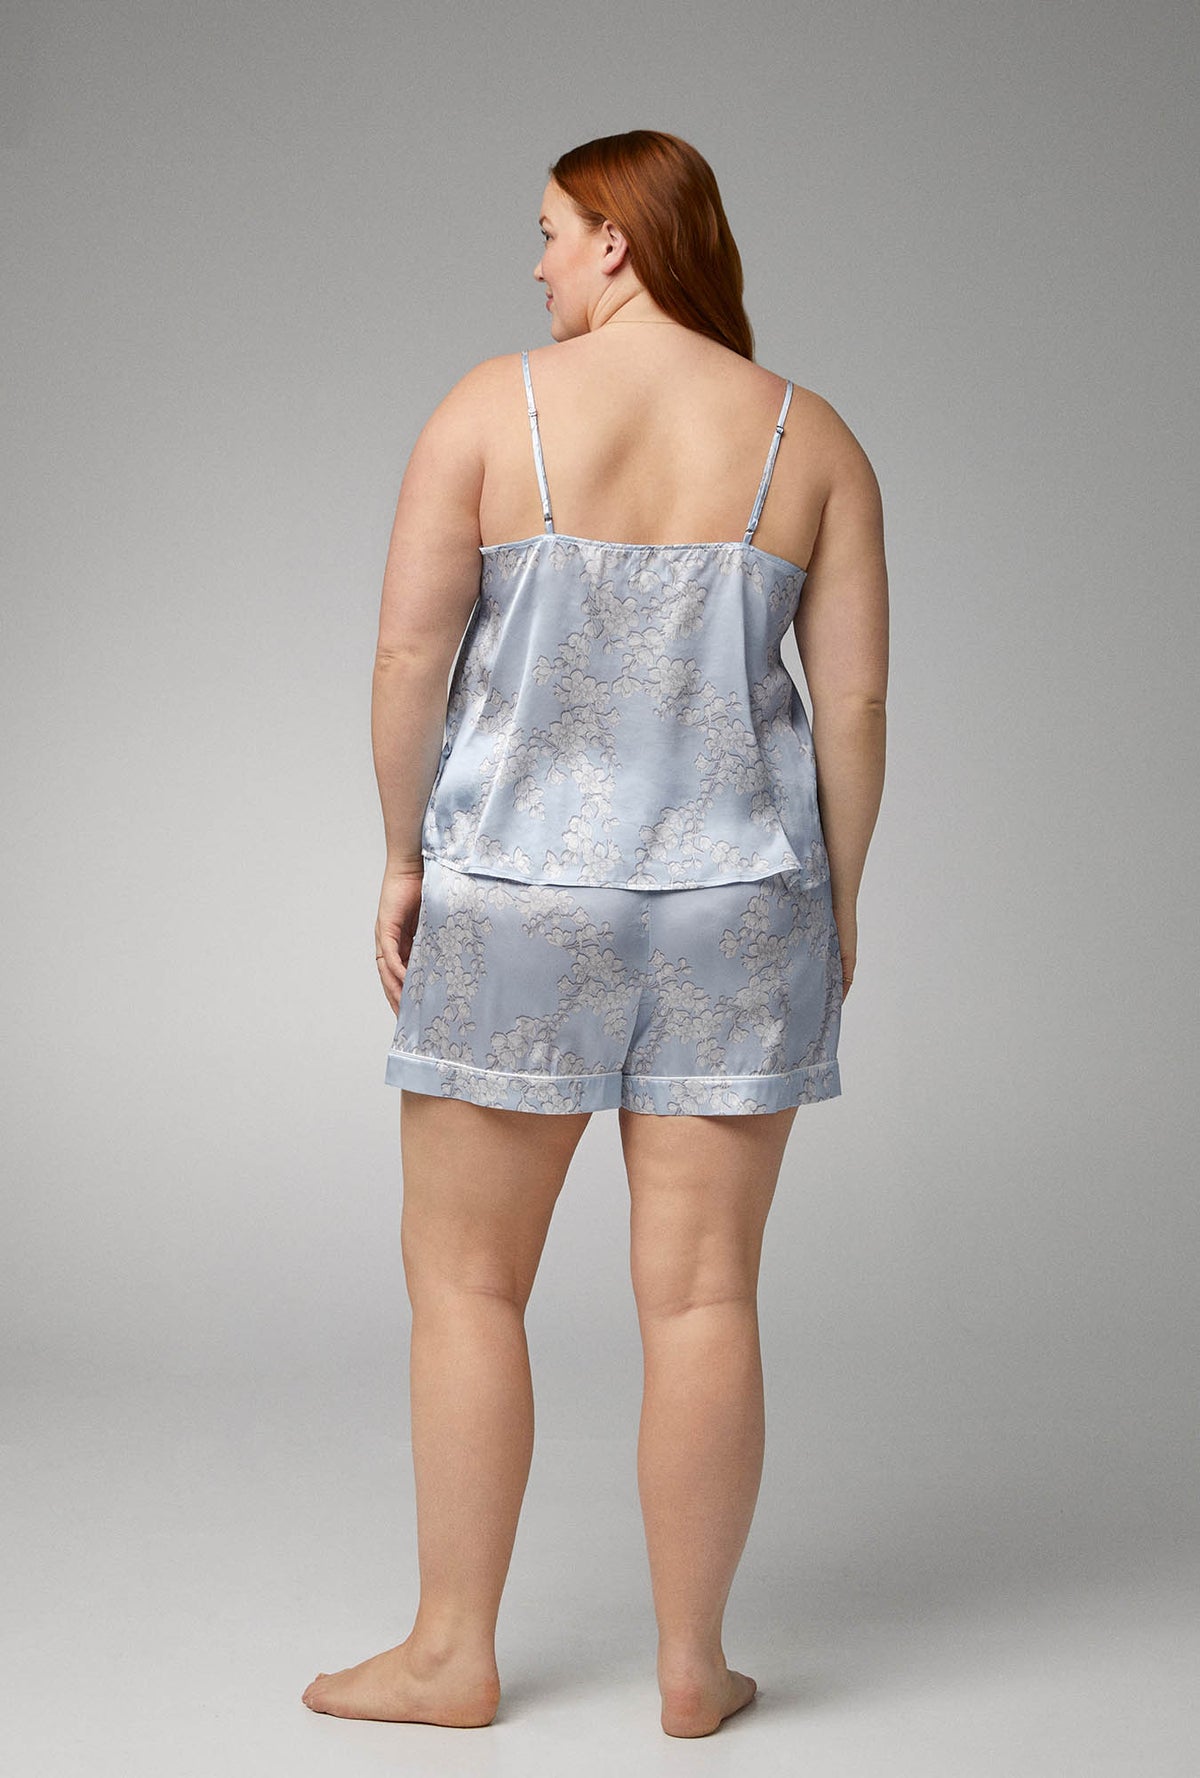 Renee's Blossom Cami Woven Silk Satin Shorty PJ Set - Bedhead Pajamas